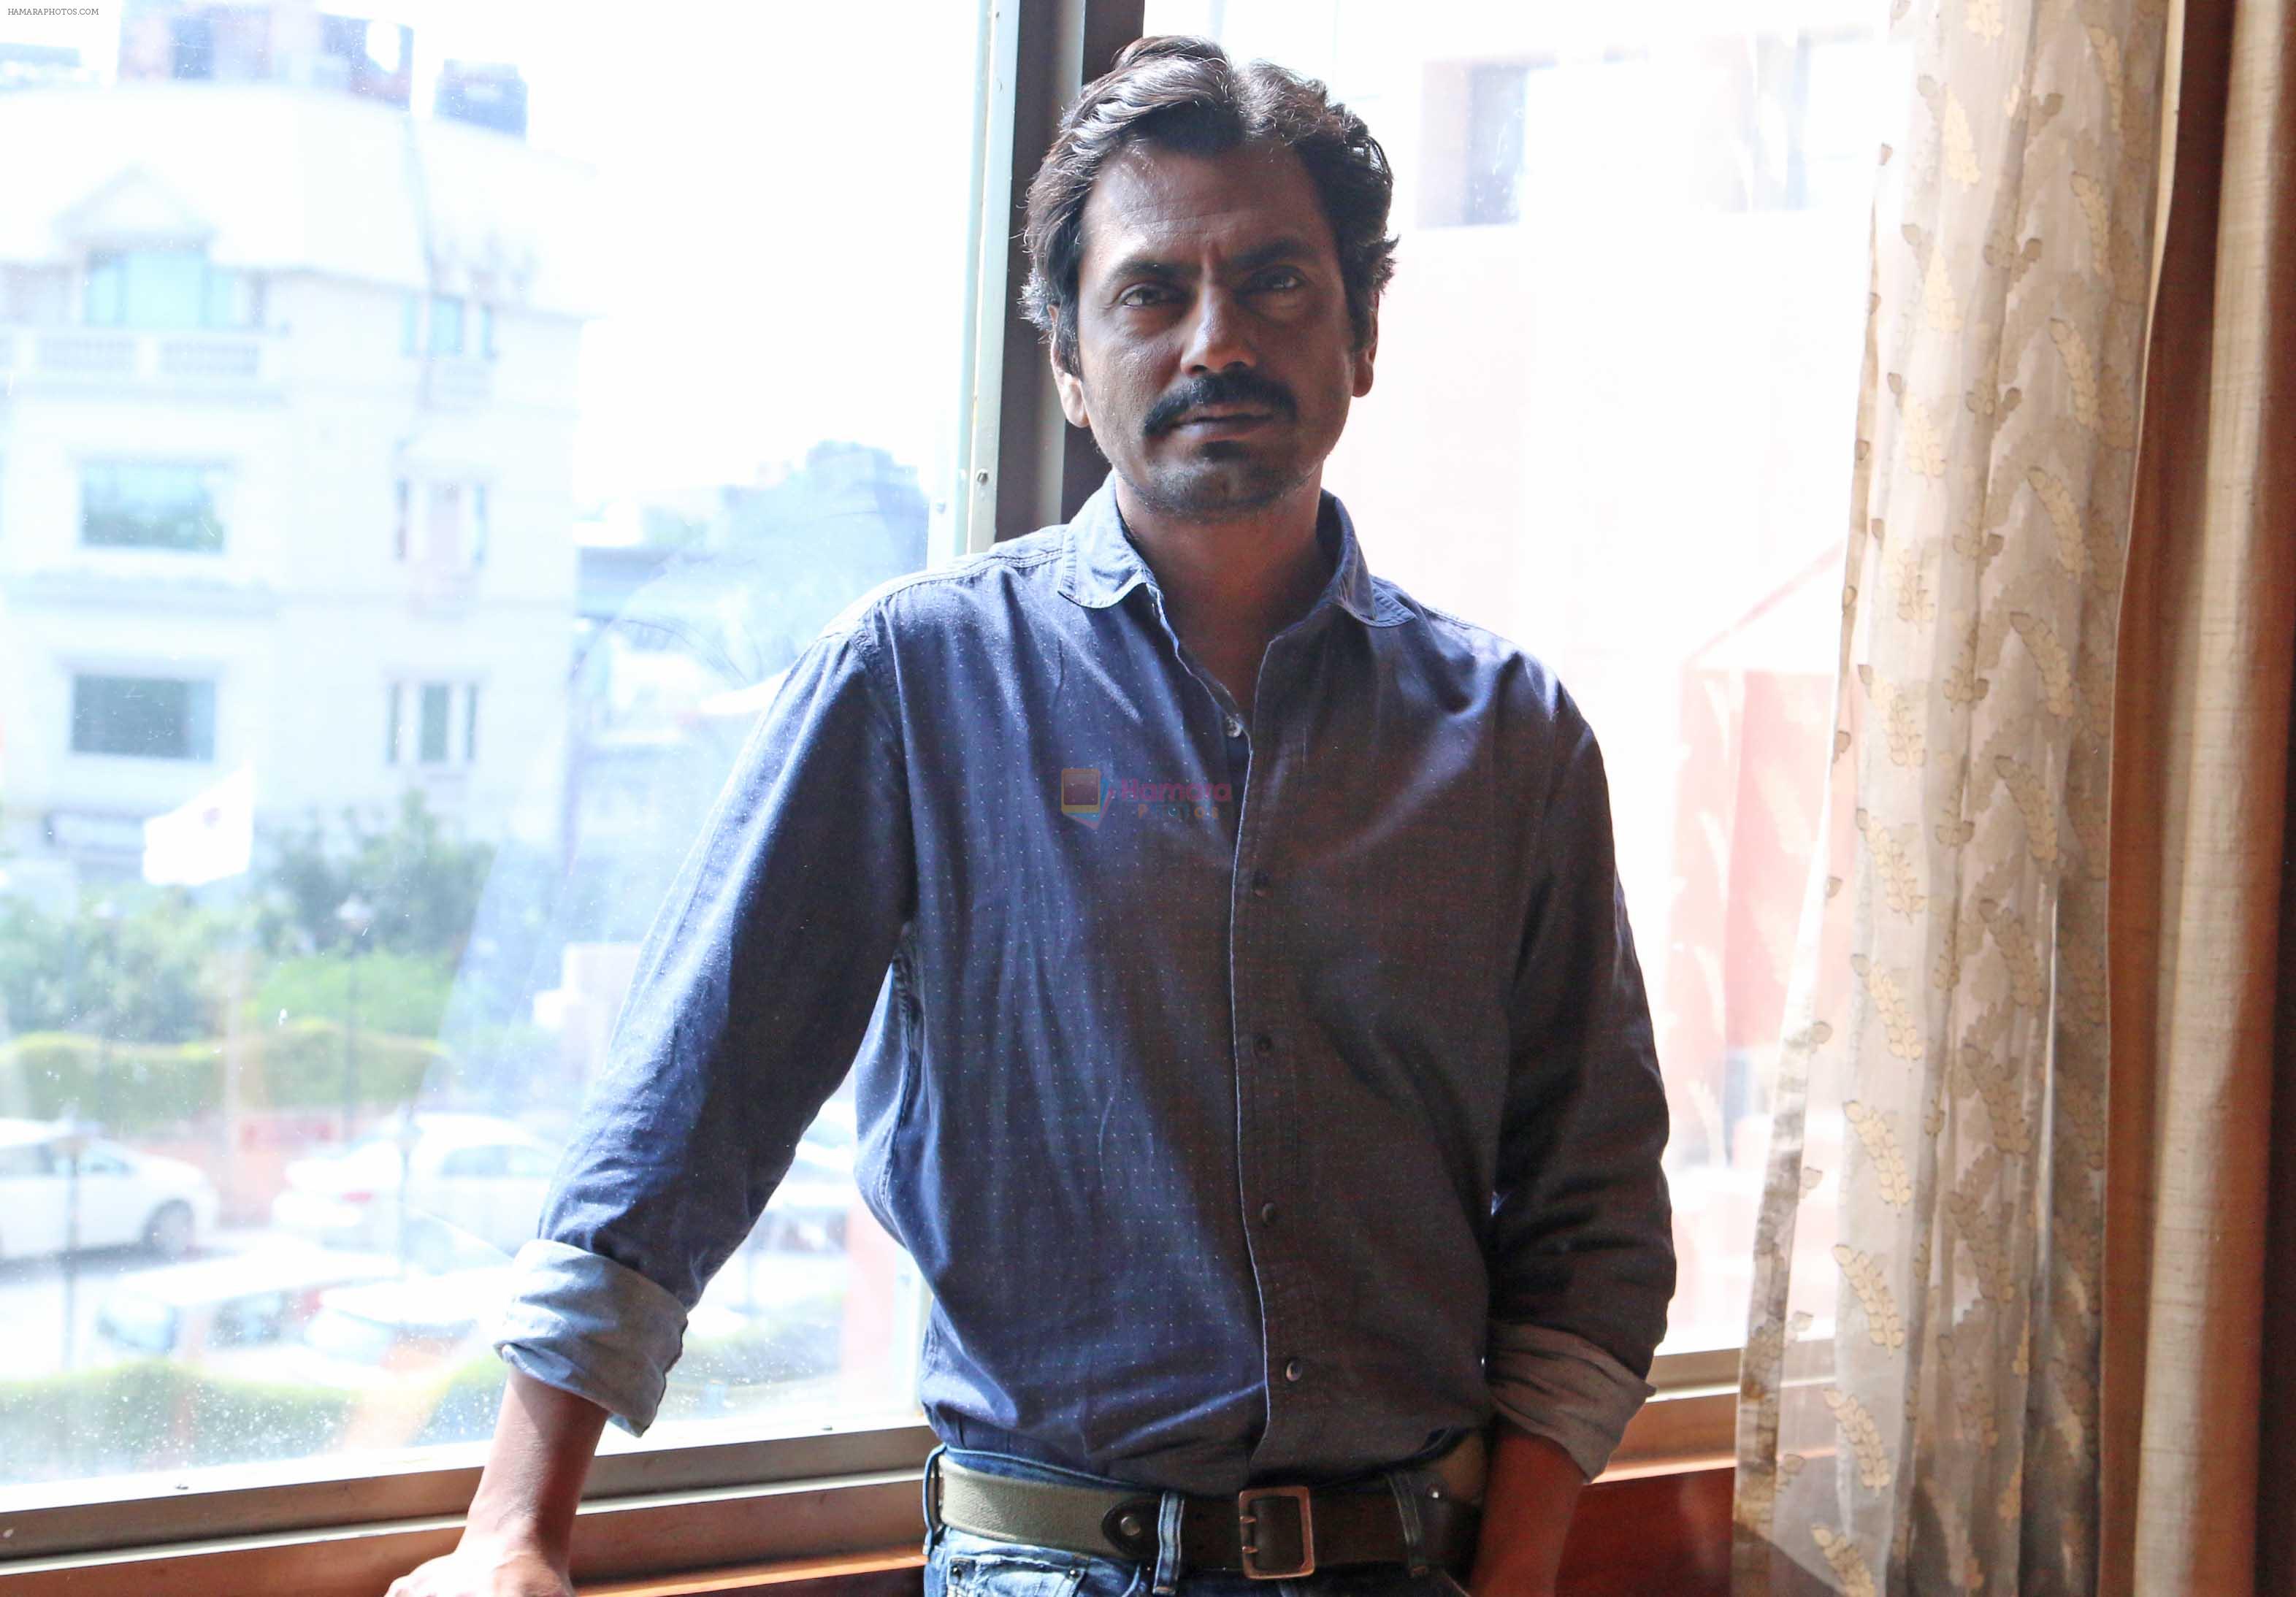 Nawazuddin Siddiqui at the promotion of movie Manjhi on 18th Aug 2015